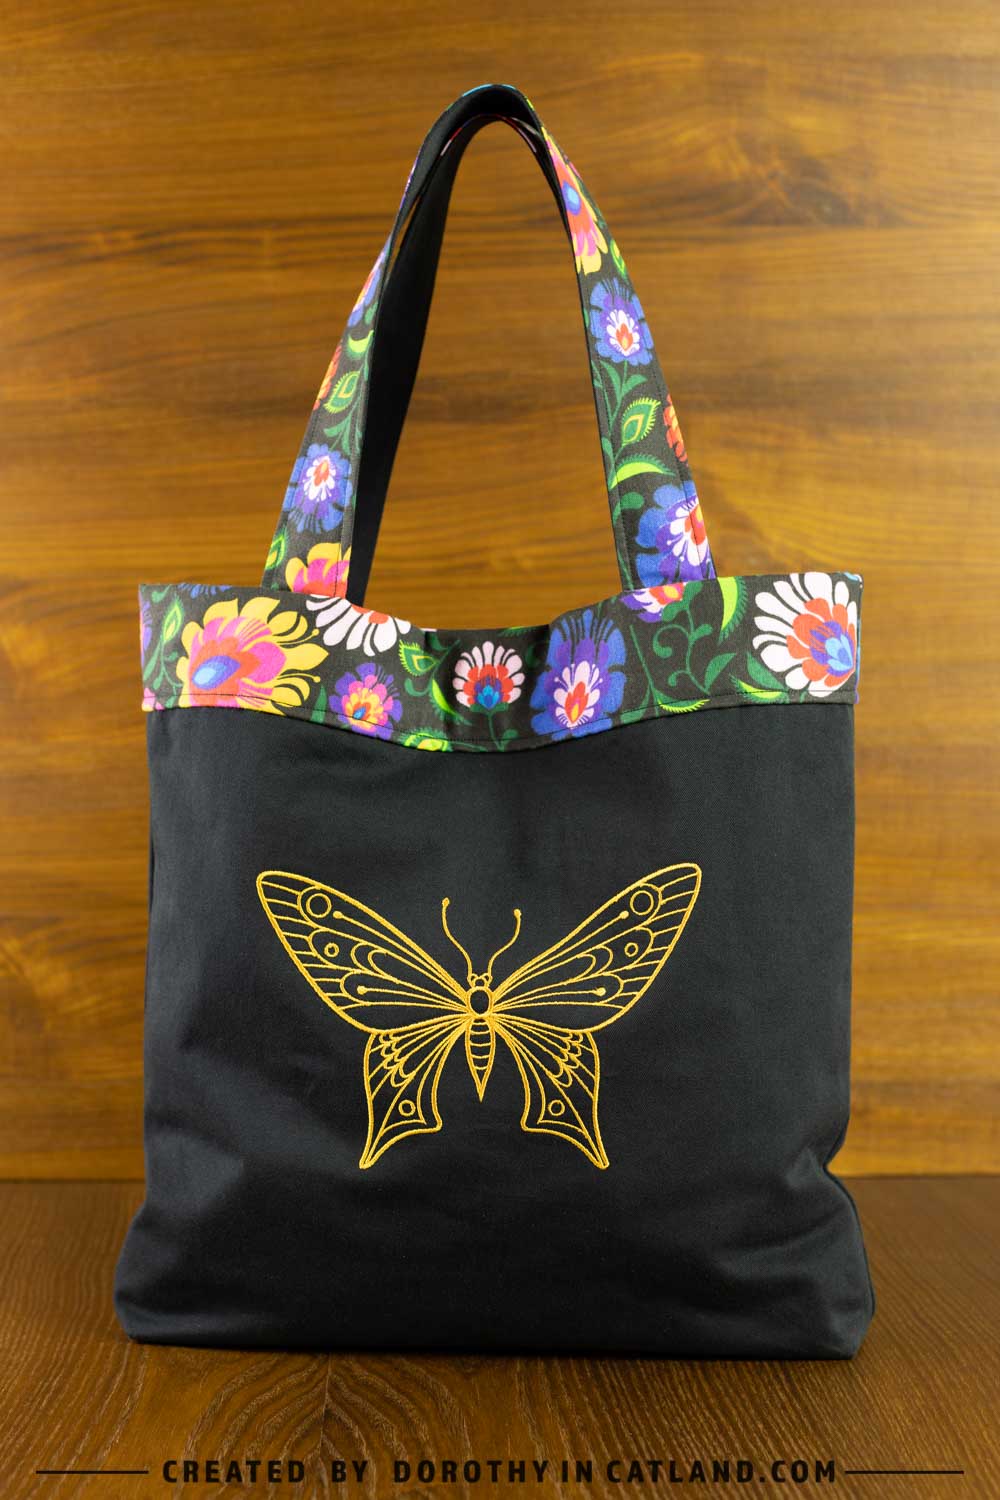 Morpho Butterfly Bag Blue Butterfly Bag Painted Butterfly - Etsy | Butterfly  bags, Handpainted bags, Painted bags